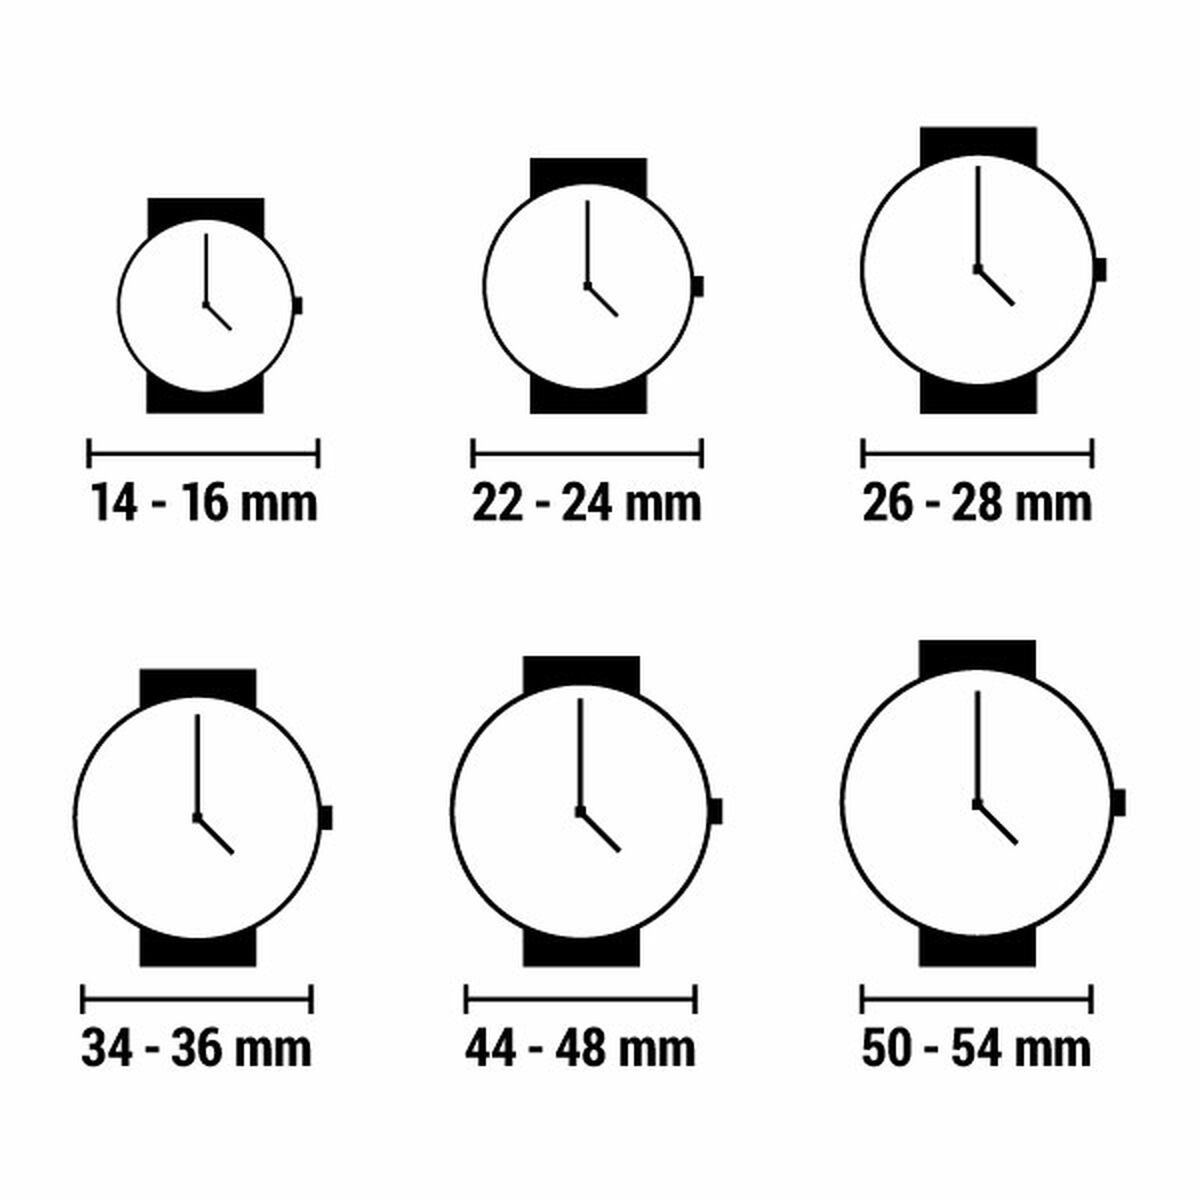 Horloge Dames Chronostar (Ø 32 mm)